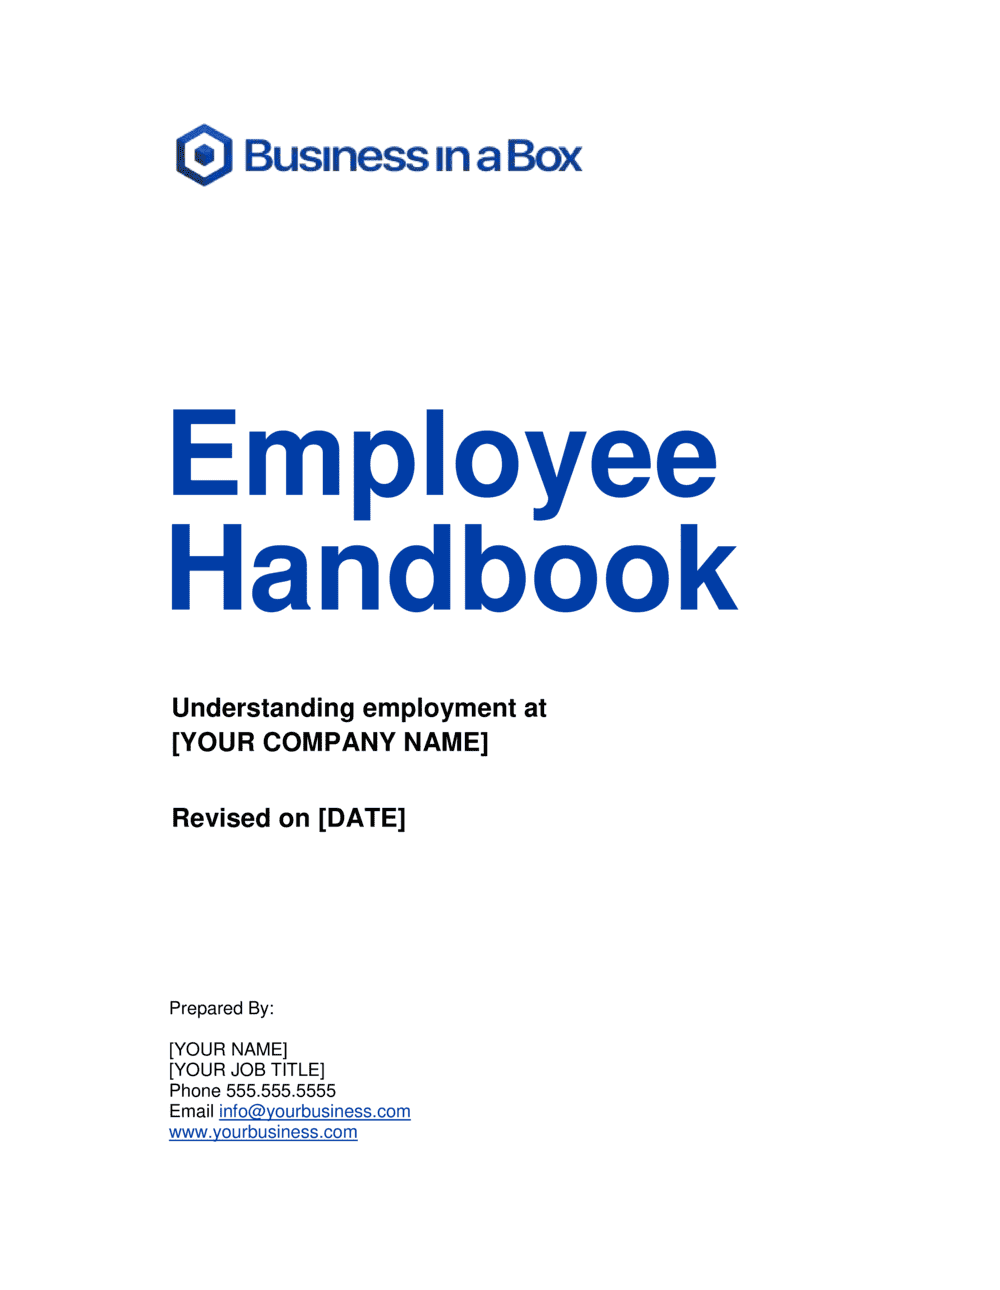 Employee Handbook Template by BusinessinaBox™